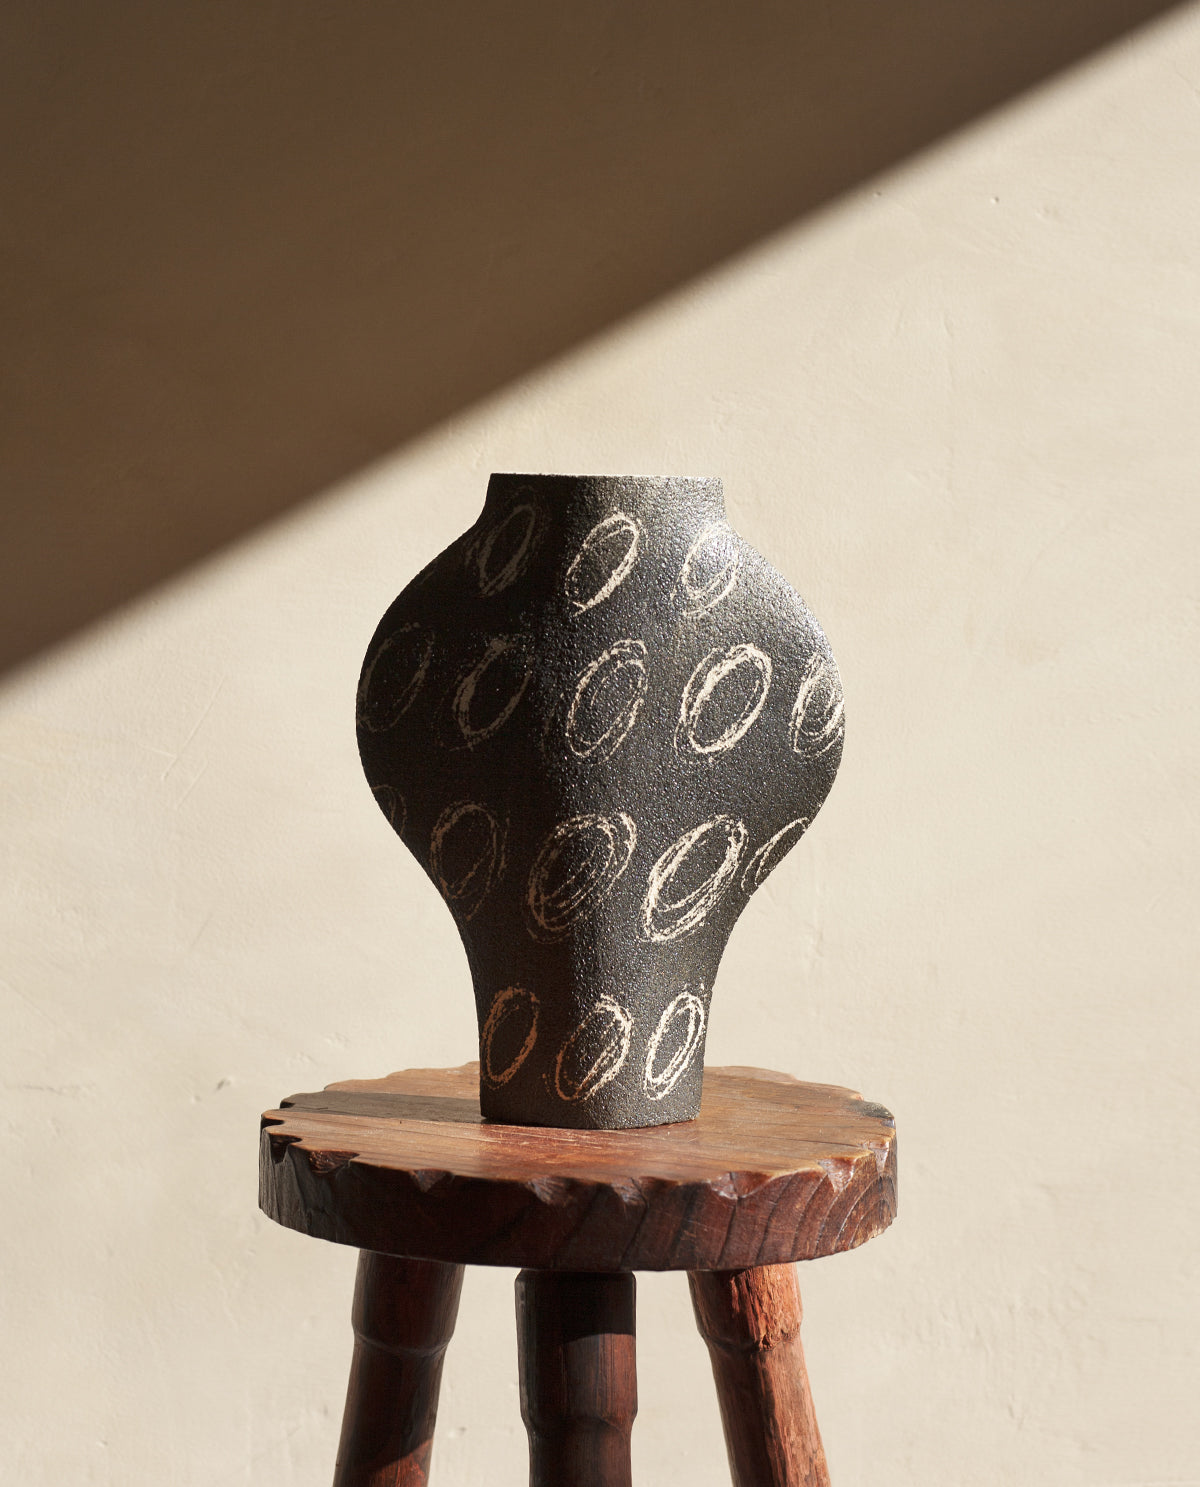 Ceramic Vase ‘Dal - Negative Big Rounds’